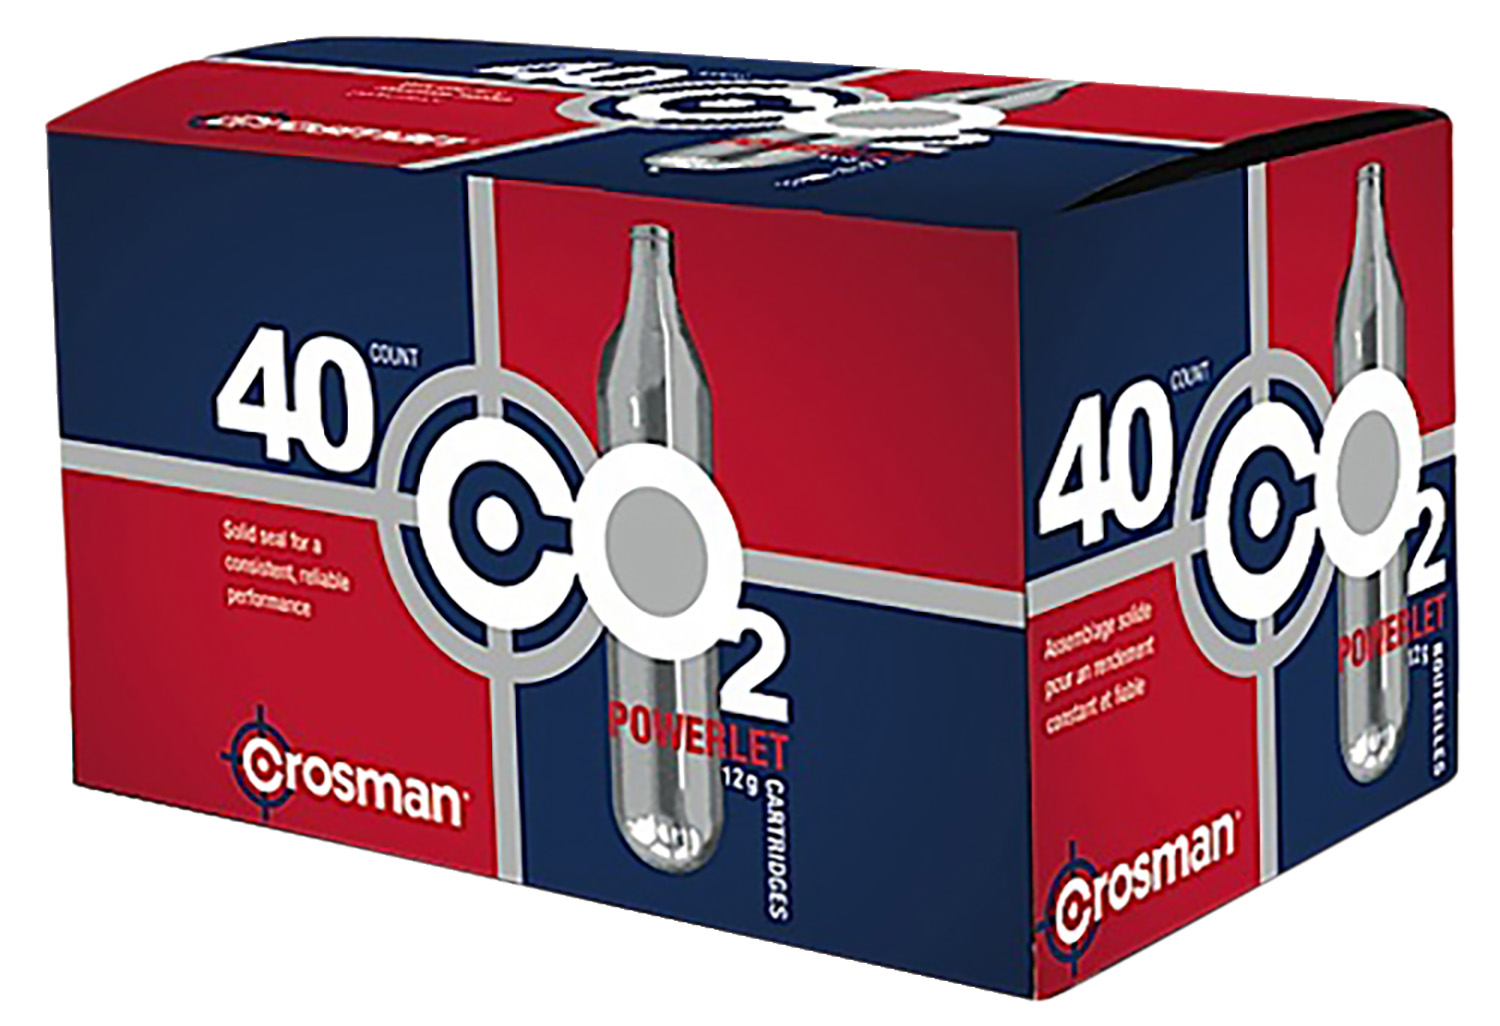 Crosman 23140 Powerlet CO2 12 Grams 40 Per Pkg